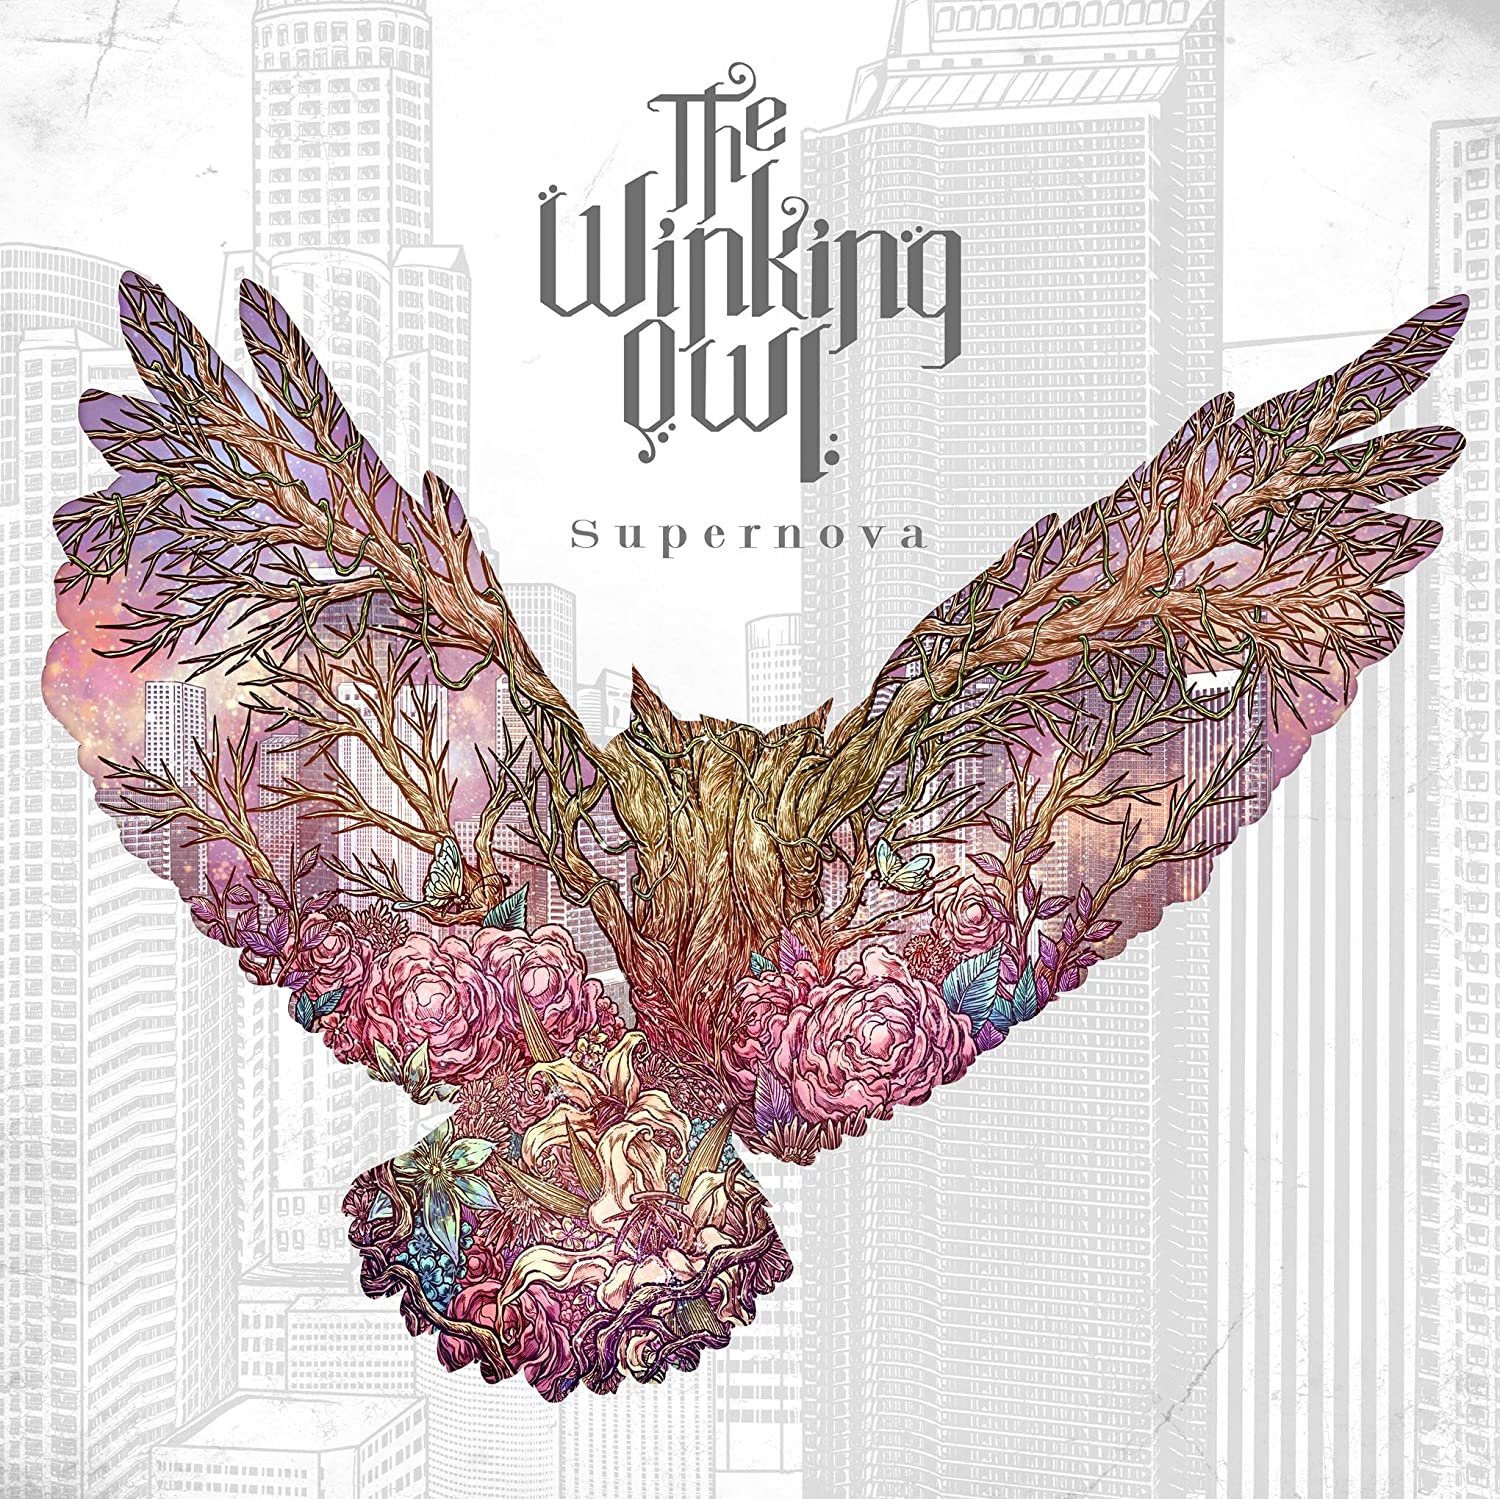 SUPERNOVA / THE WINKING OWL